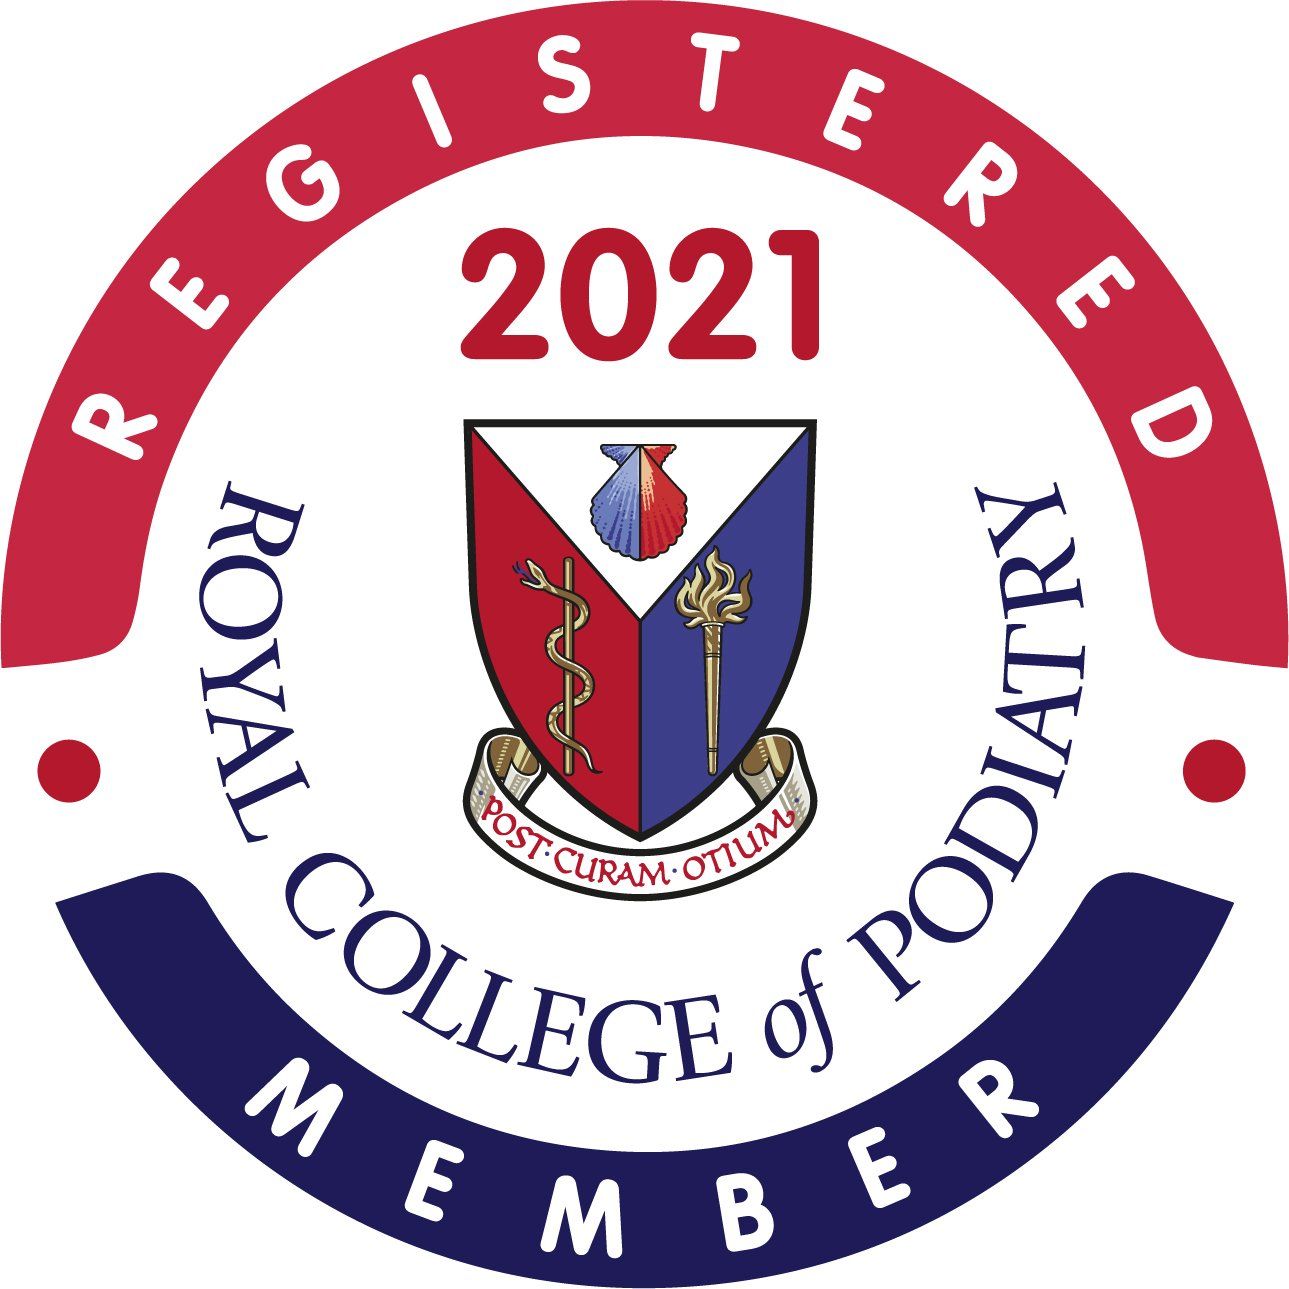 Registered Member of Royal College of Podiatry